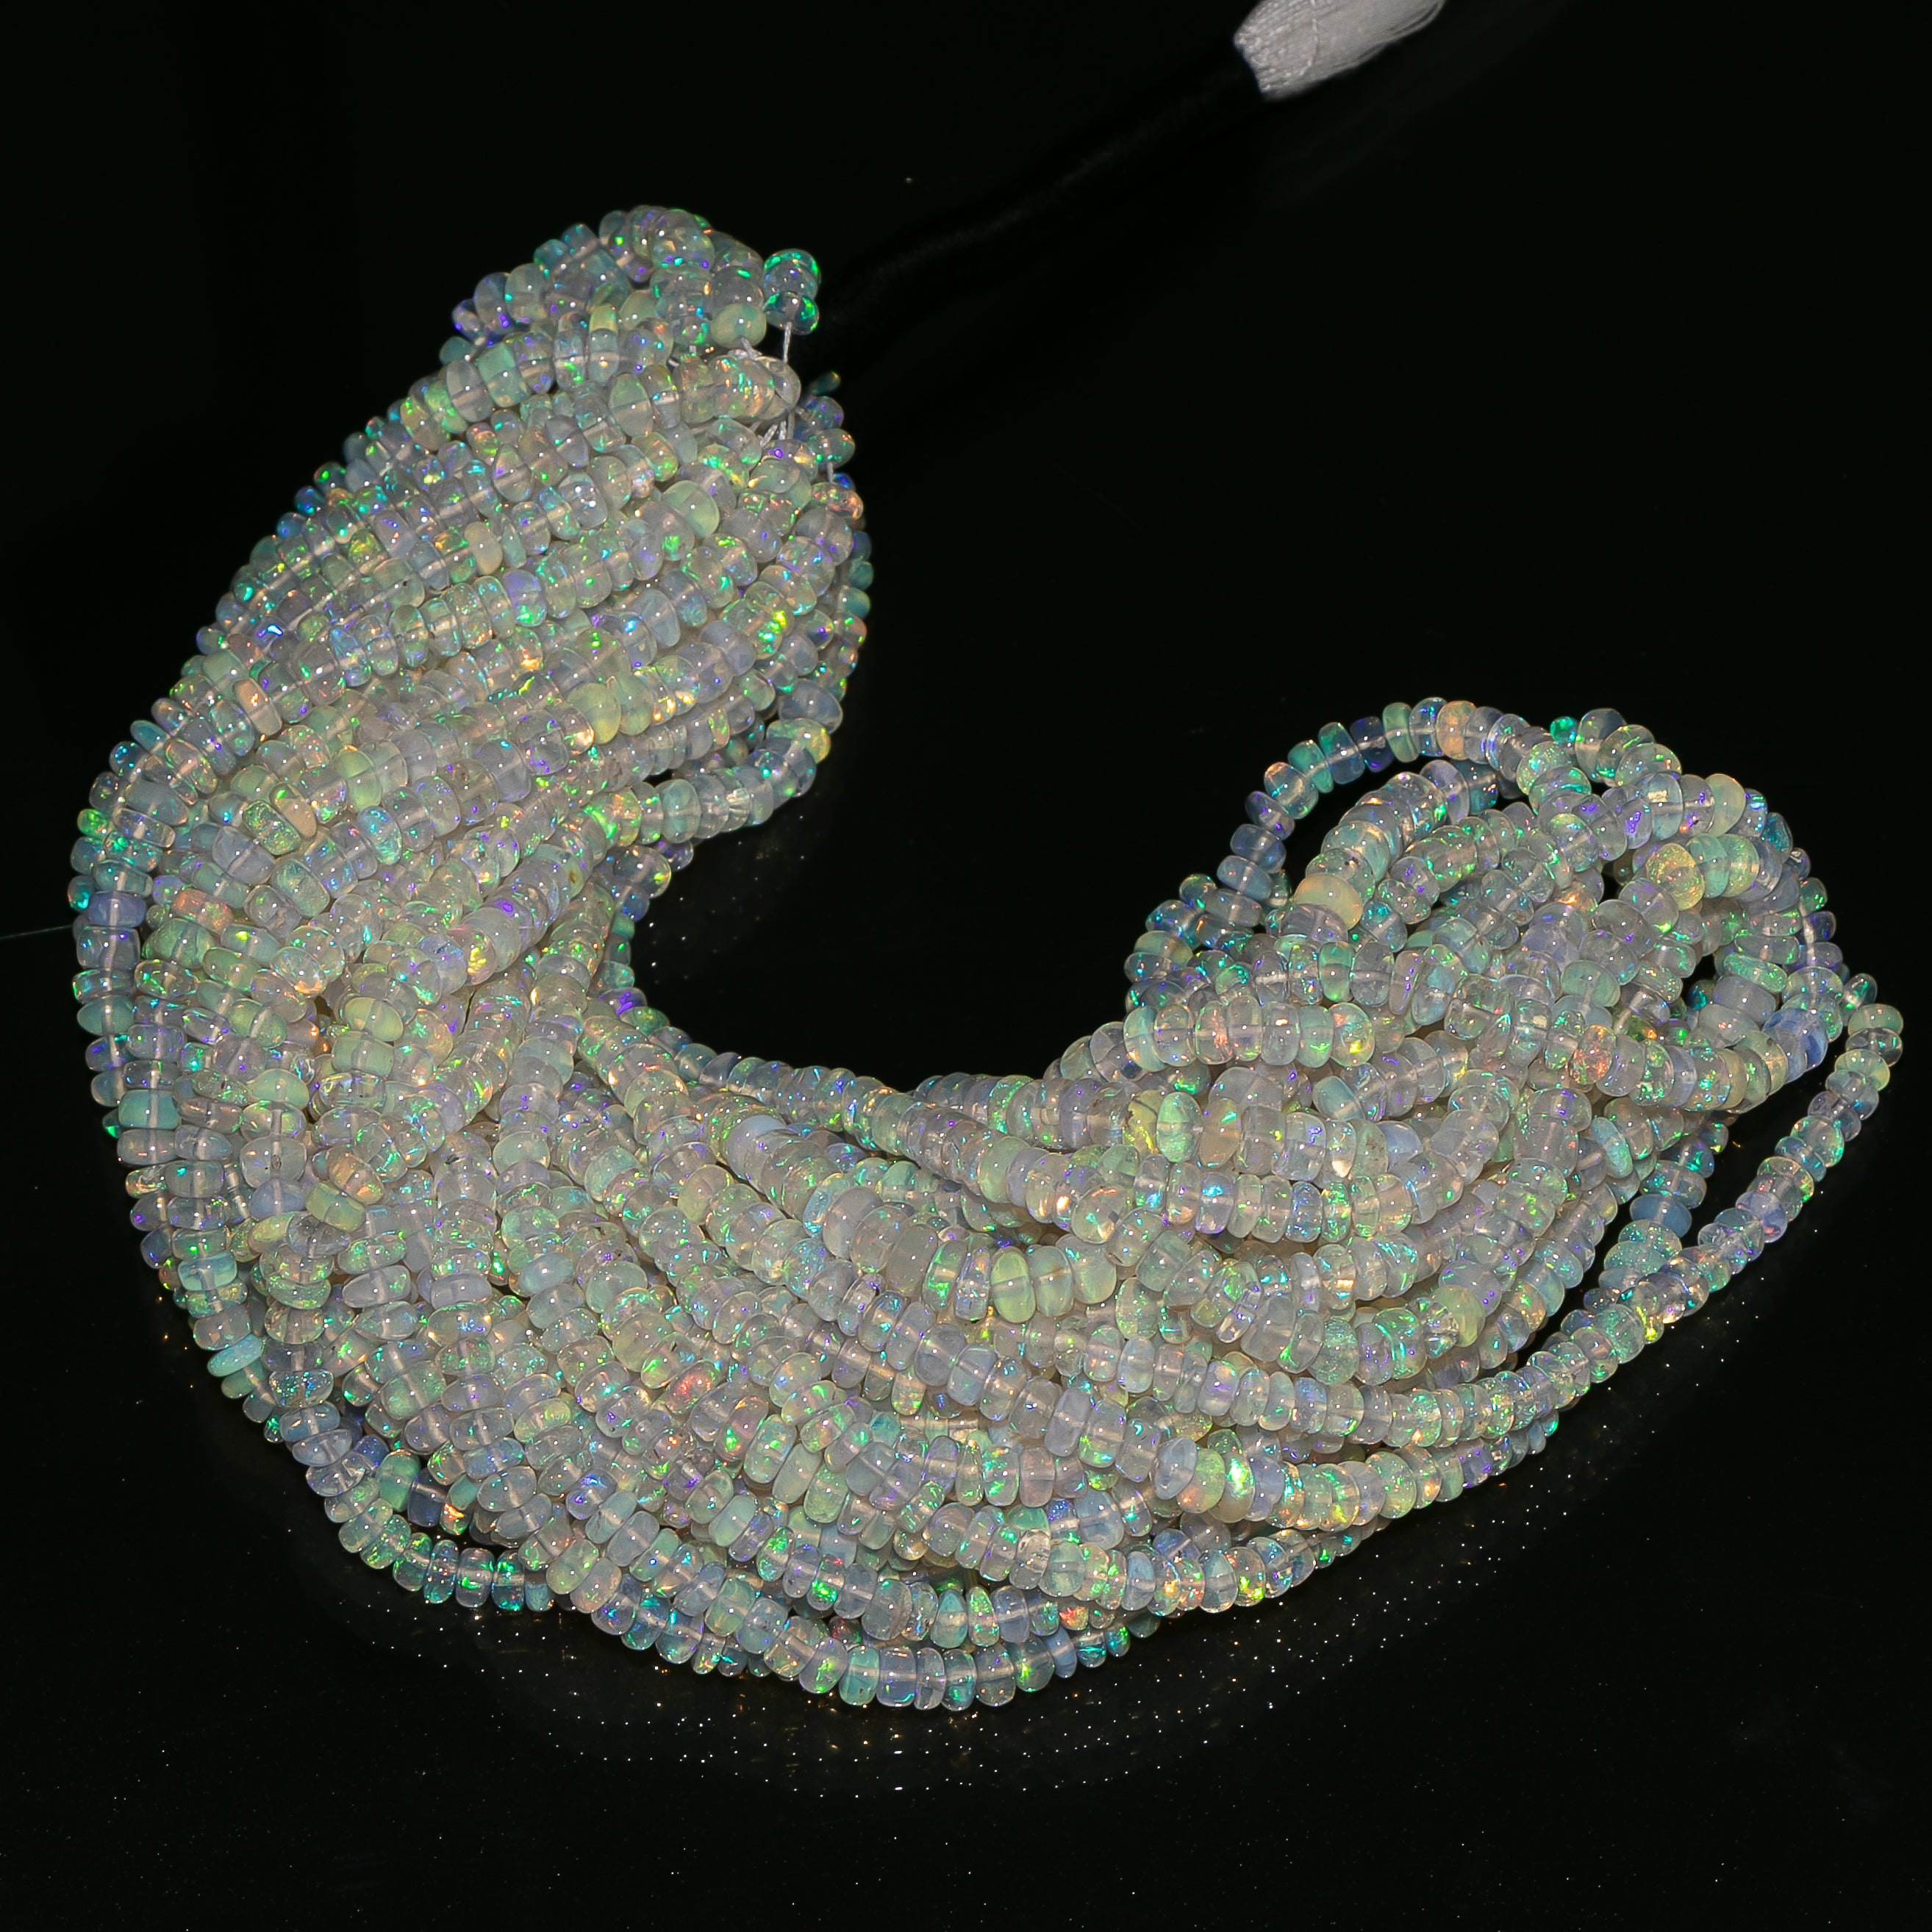 4-4.5 mm Ethiopian Opal Beads, Ethiopian Opal Smooth Beads, Ethiopian Opal Rondelle Beads, Opal Gemstone Beads, Opal Beads, Beads